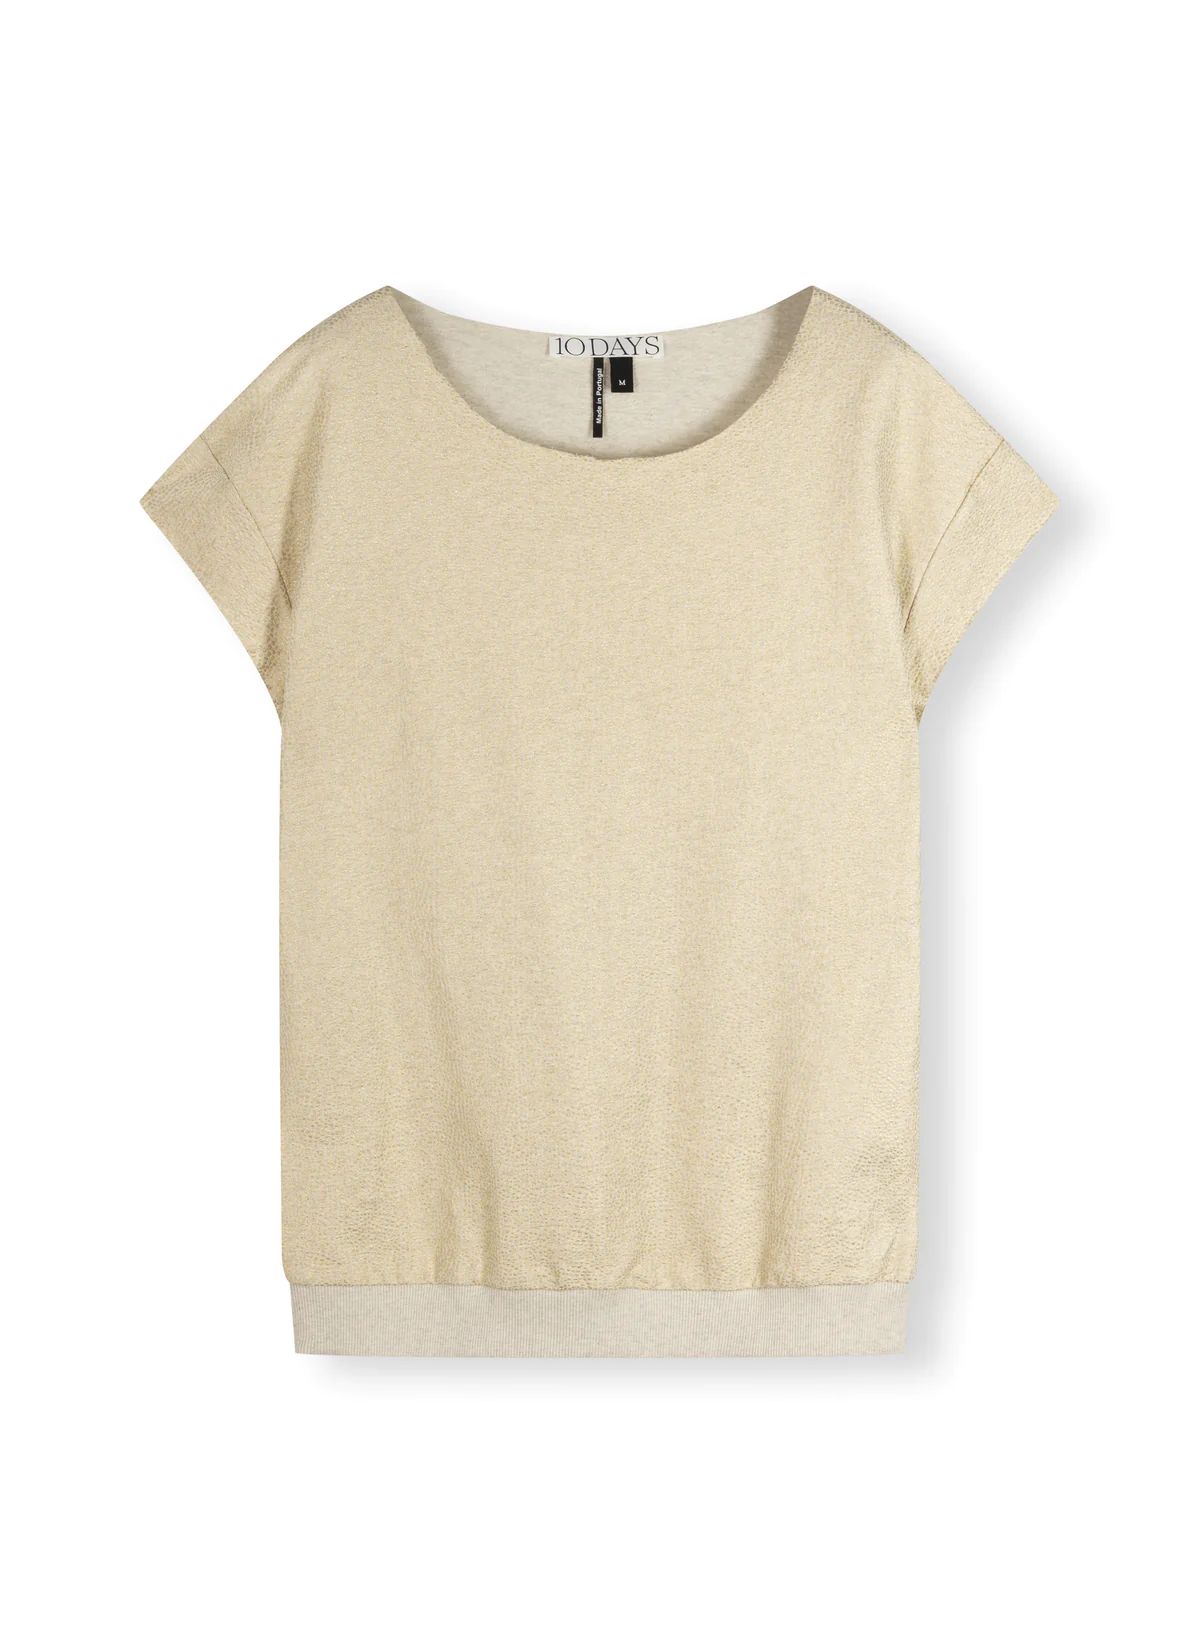 10Days short sleeve sweater foil light safari